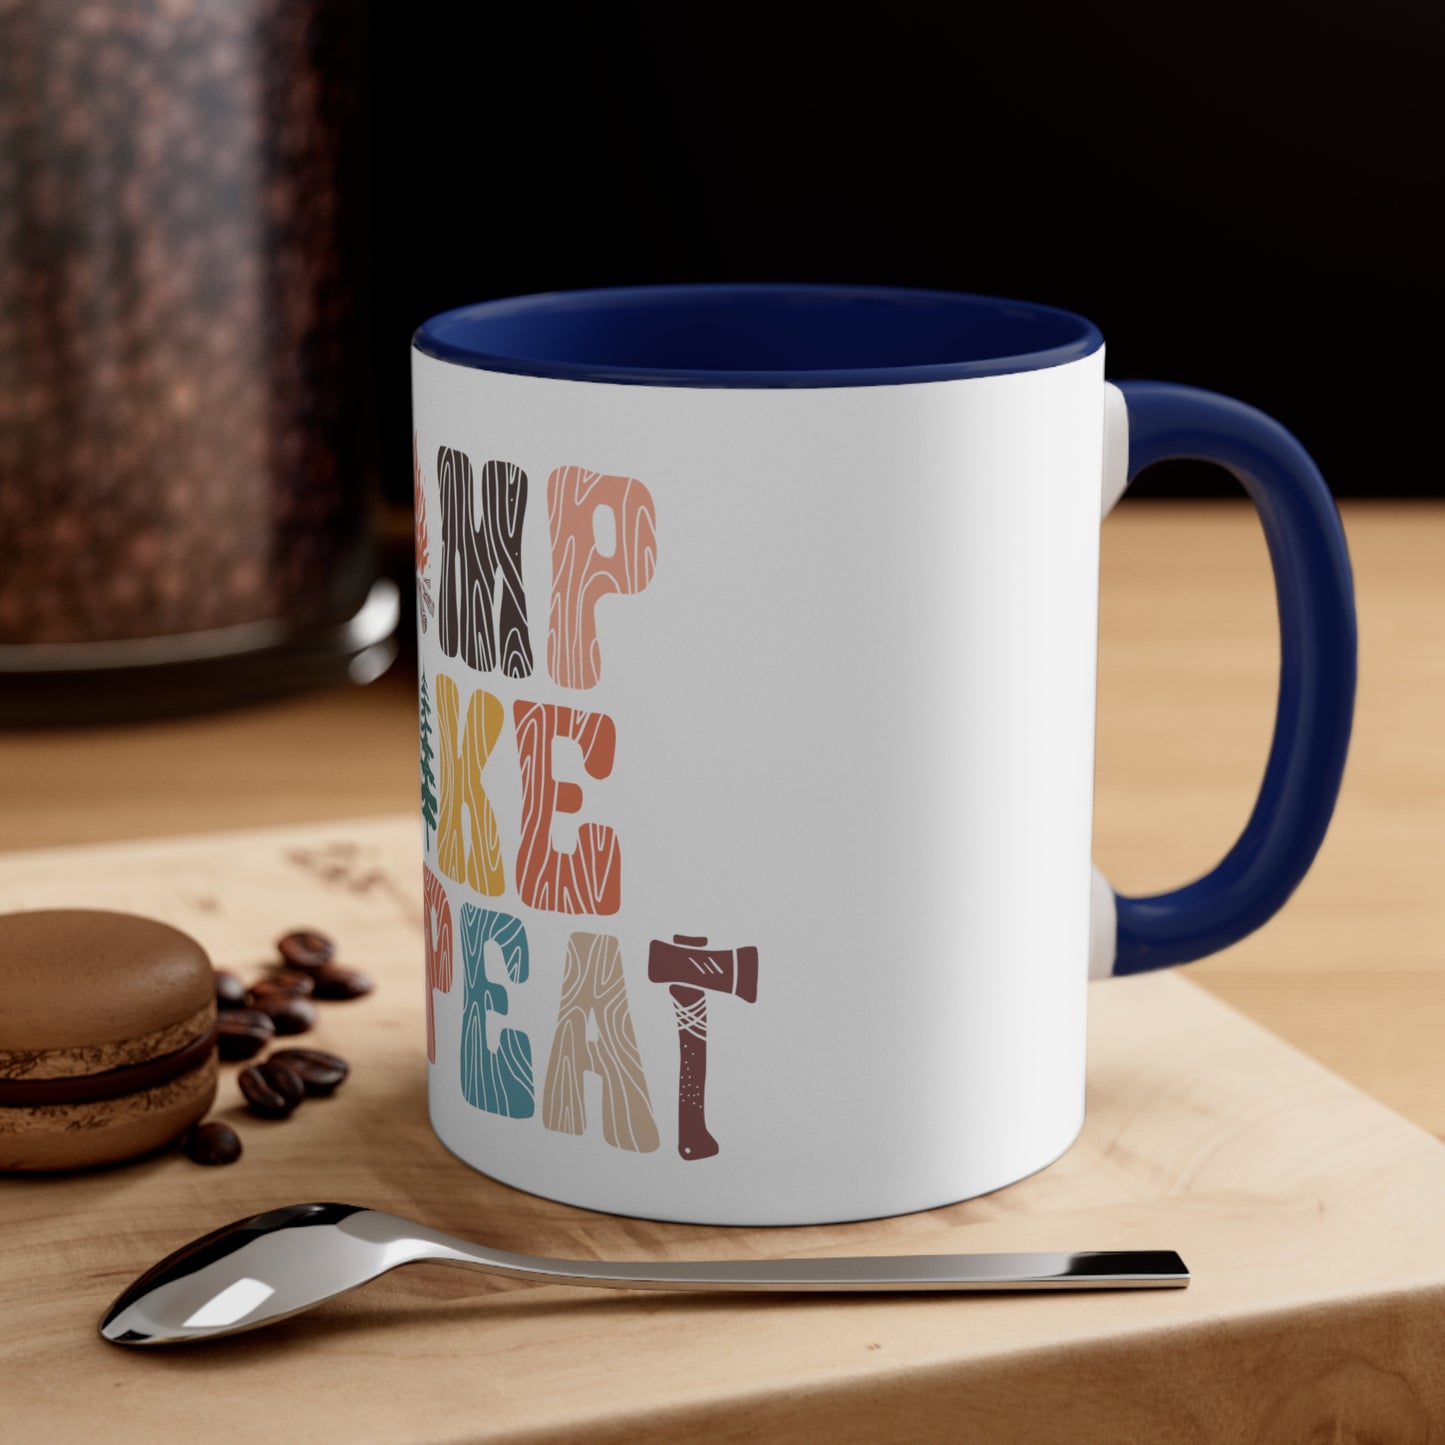 Camp Hike Repeat - Accent Coffee Mug, 11oz